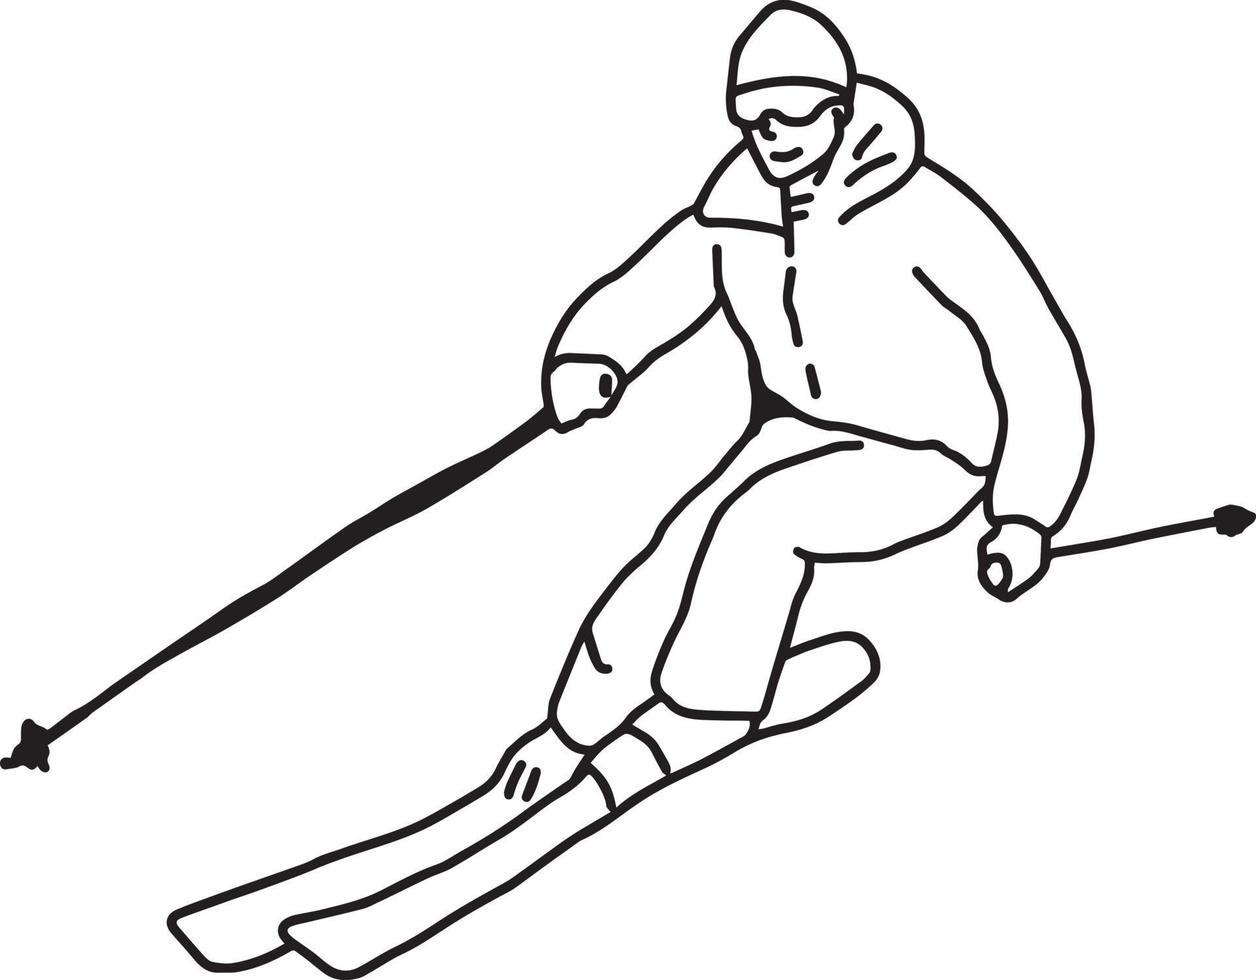 esquiador de montaña - ilustración vectorial boceto dibujado a mano vector